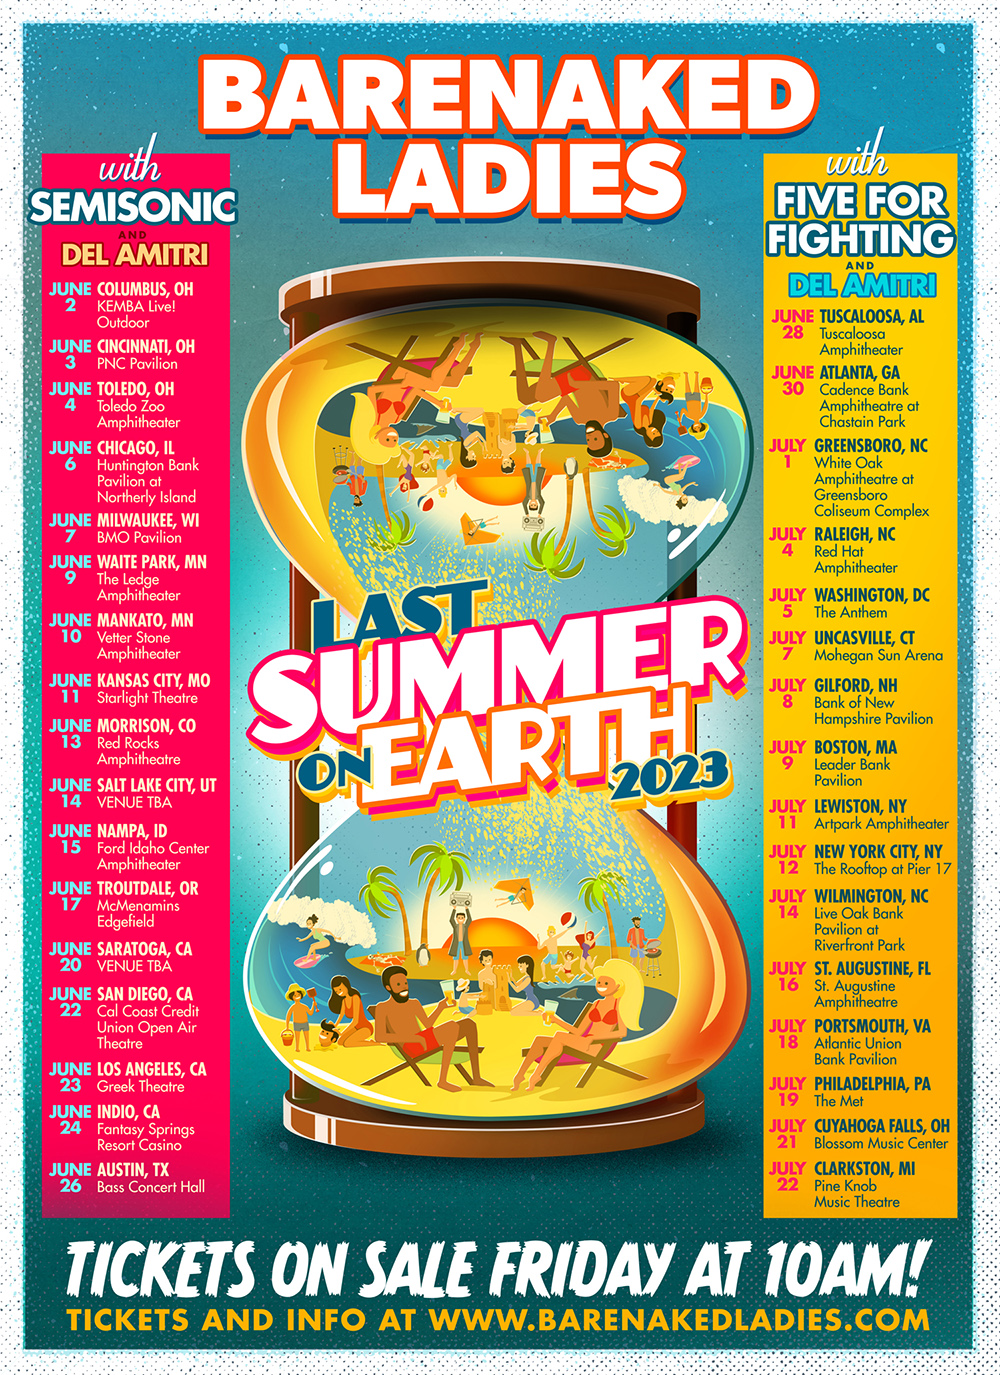 Barenaked Ladies Last Summer on Earth Tour 2023